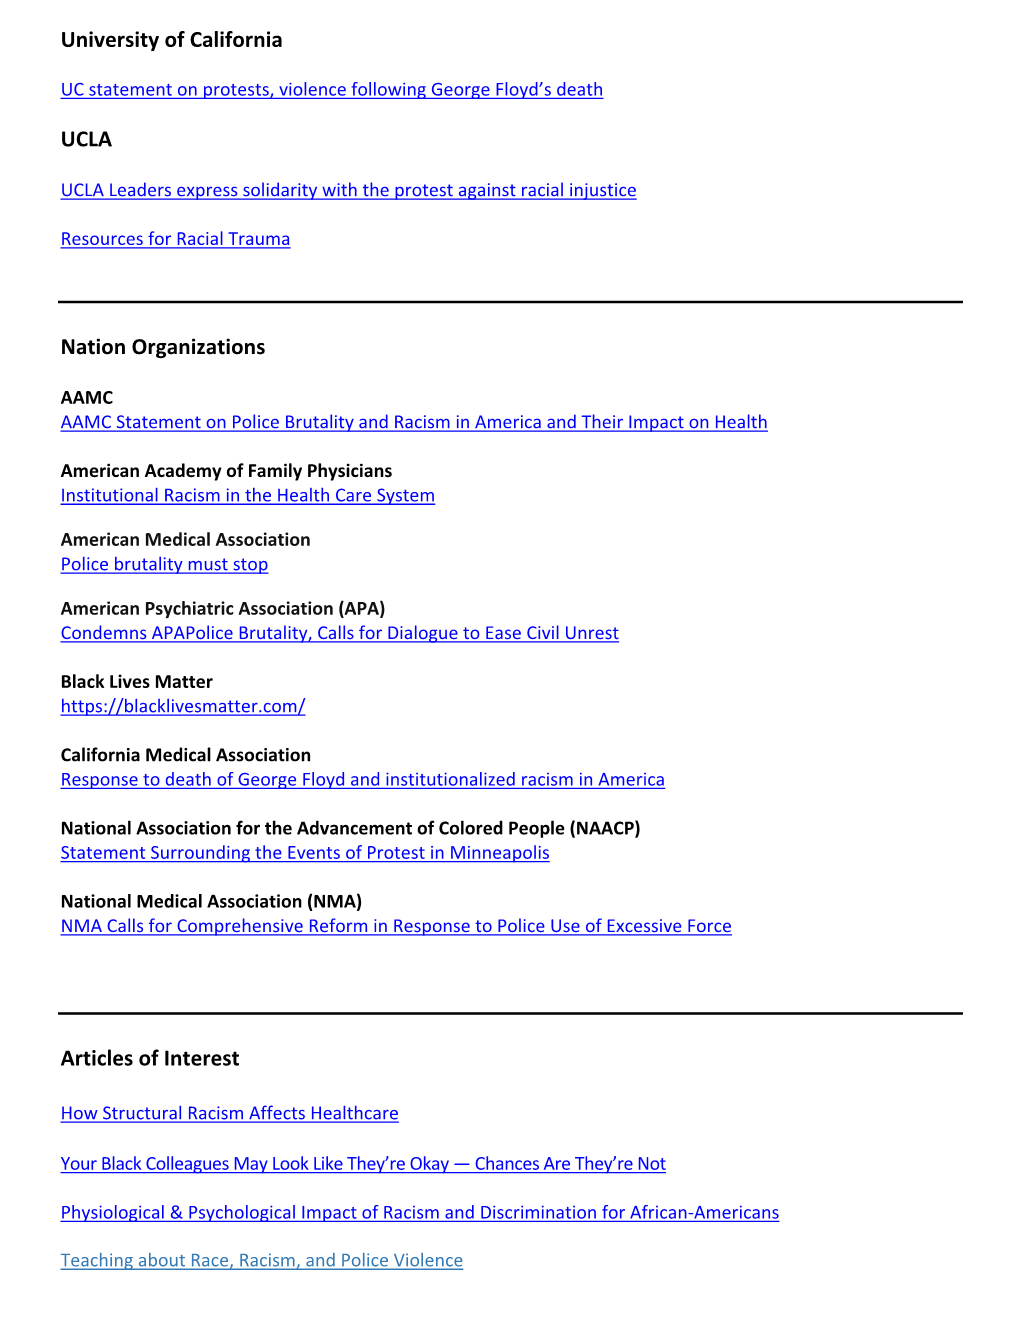 University of California UCLA Nation Organizations Articles of Interest